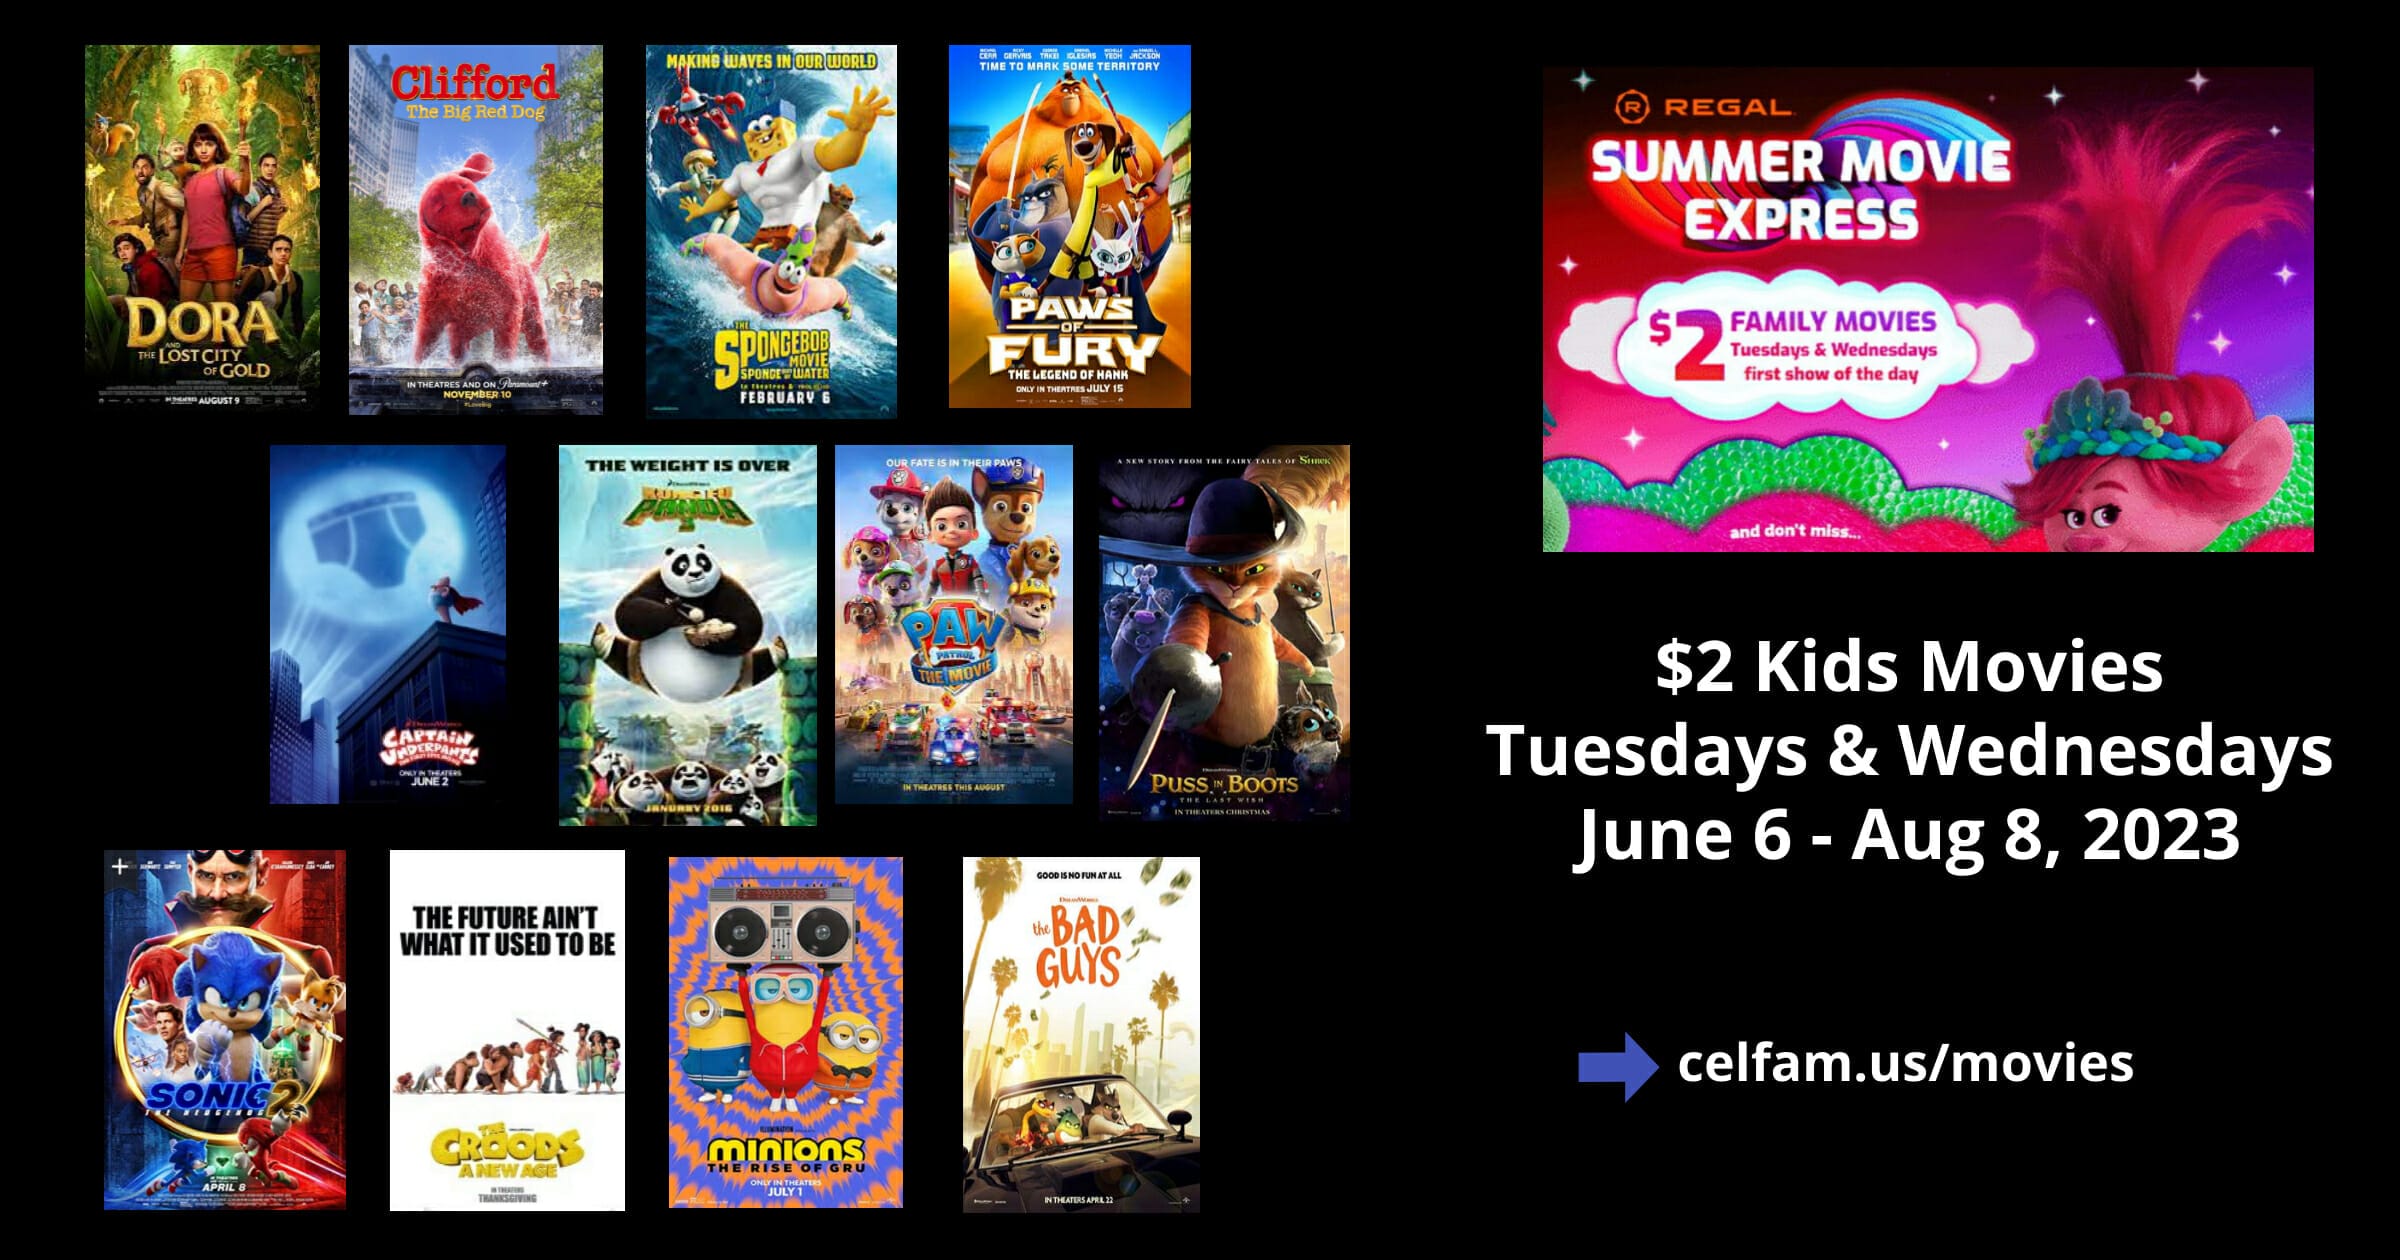 Regal Summer Movie Express 2023 2 Movies Schedule lupon.gov.ph